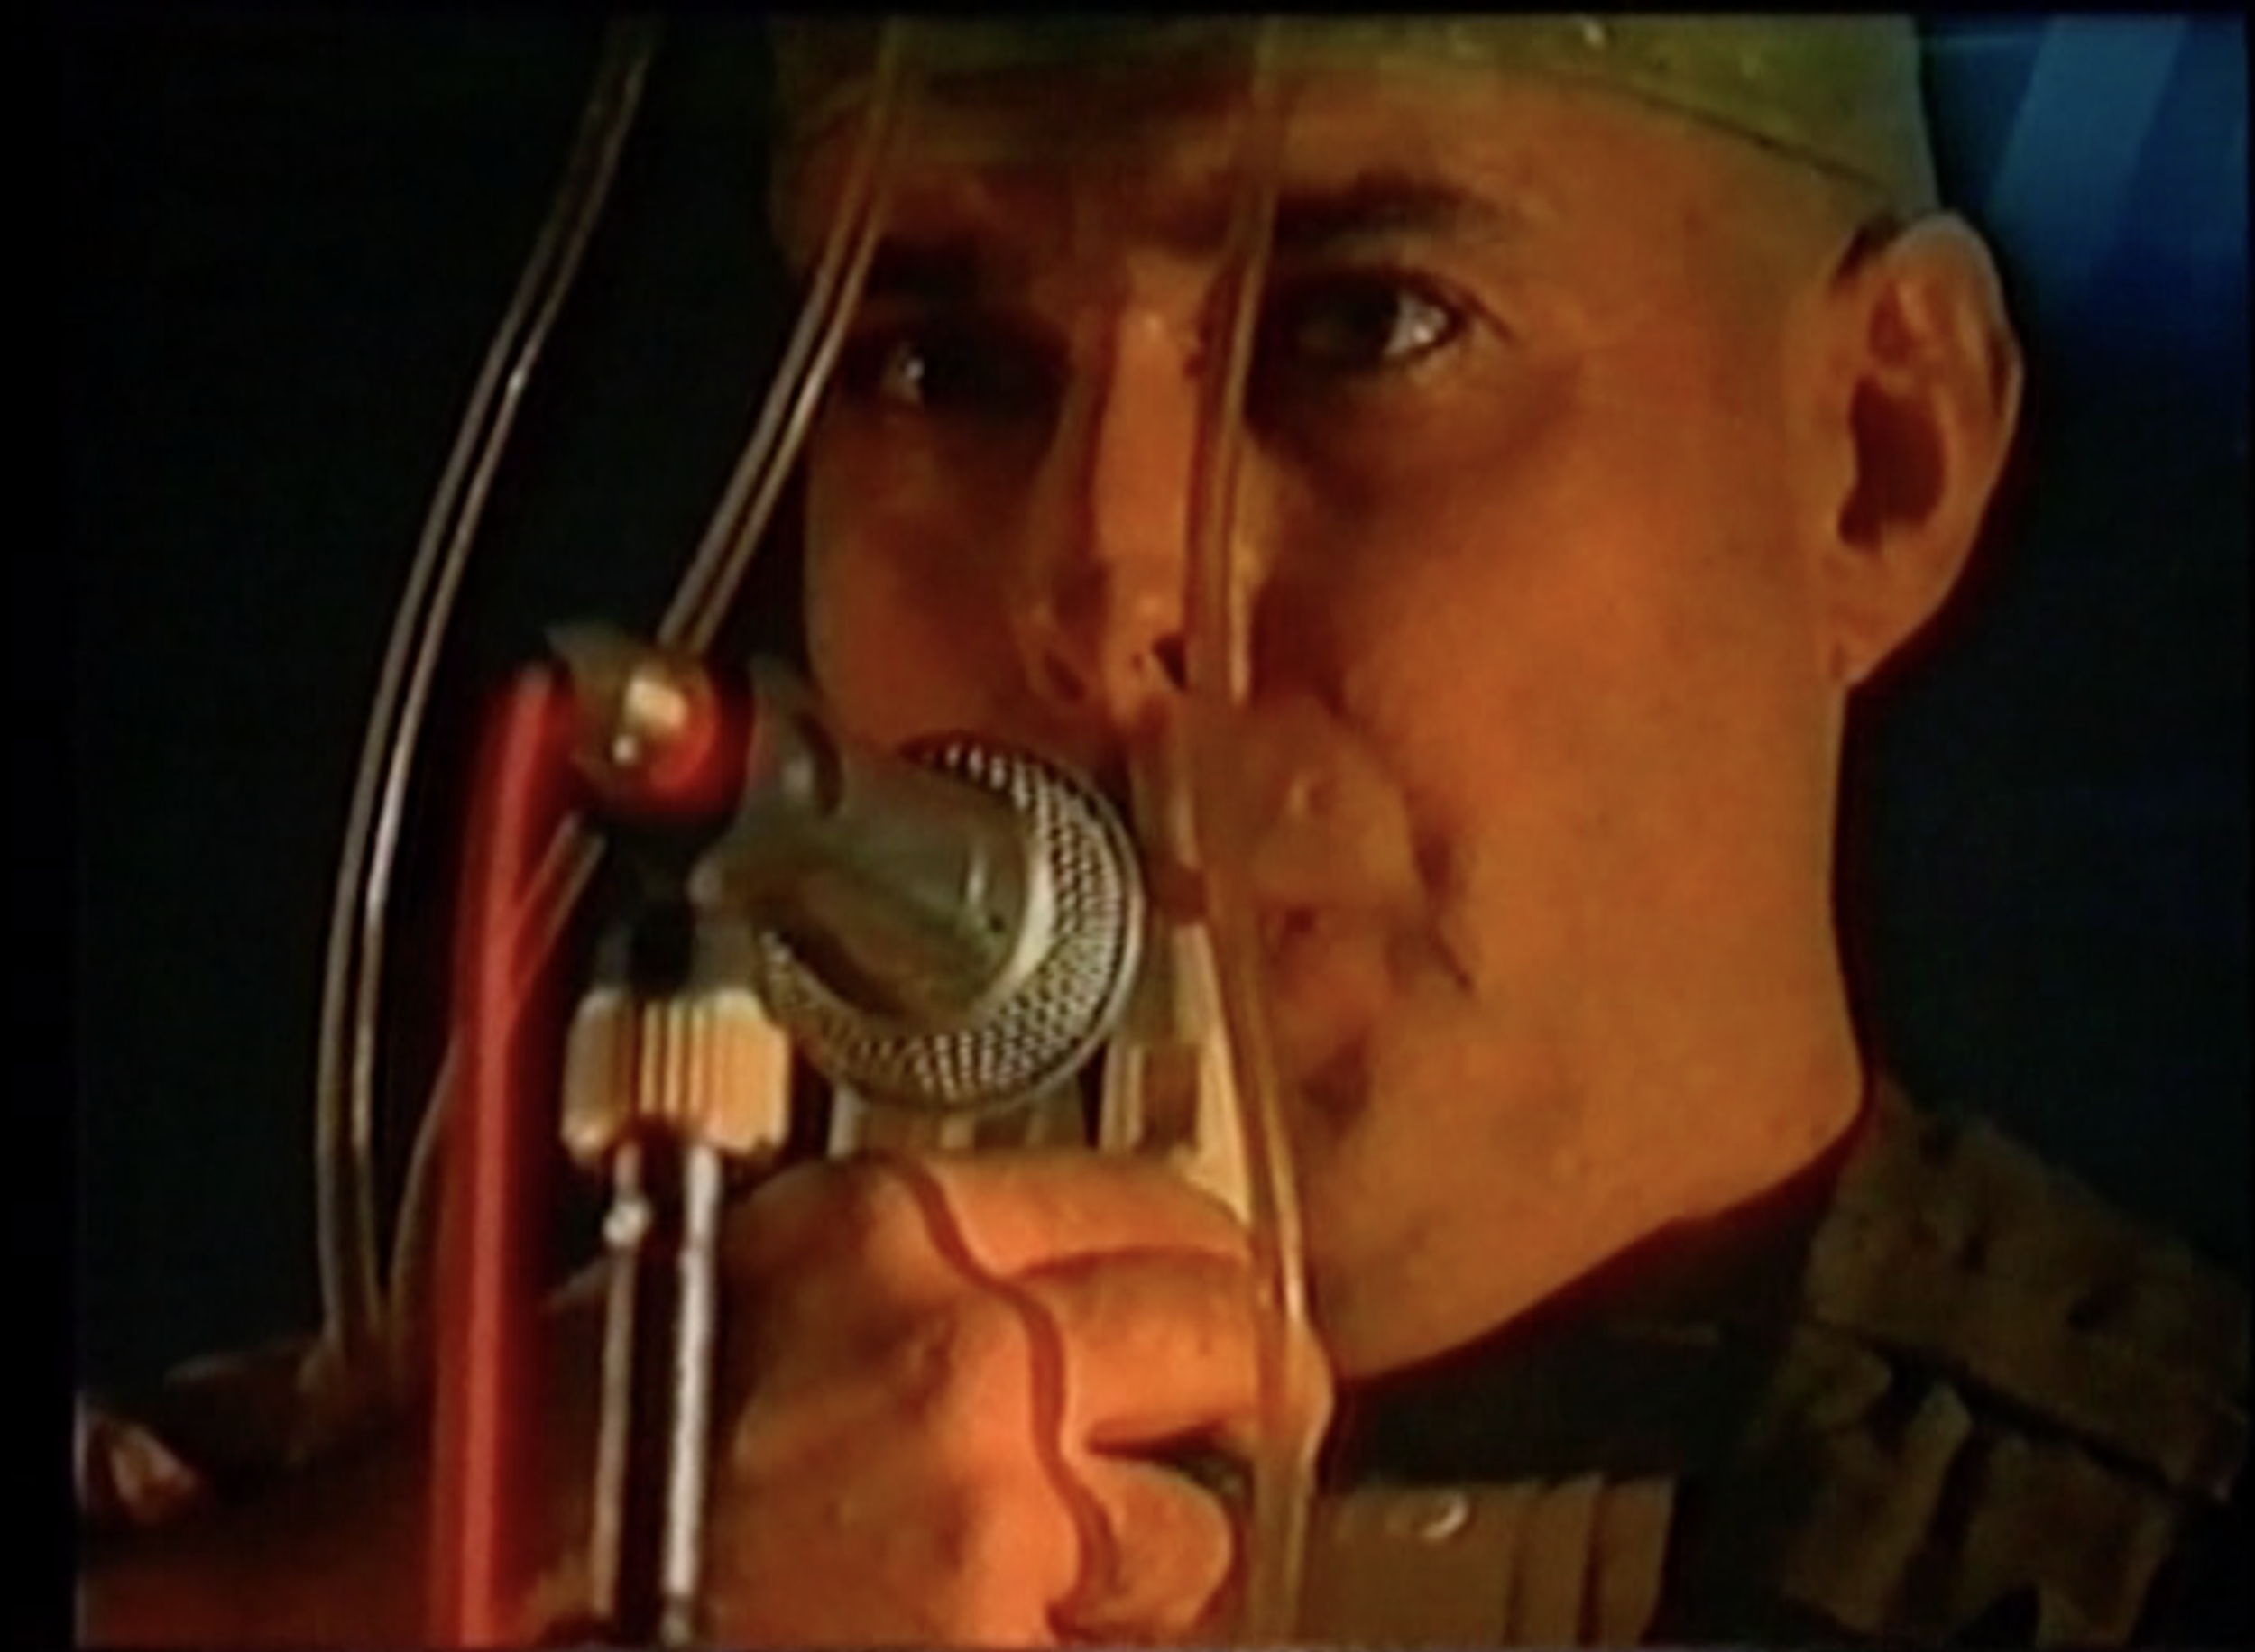 Image from Panta Rai, Performance Video with Yossi Lederman, 1991